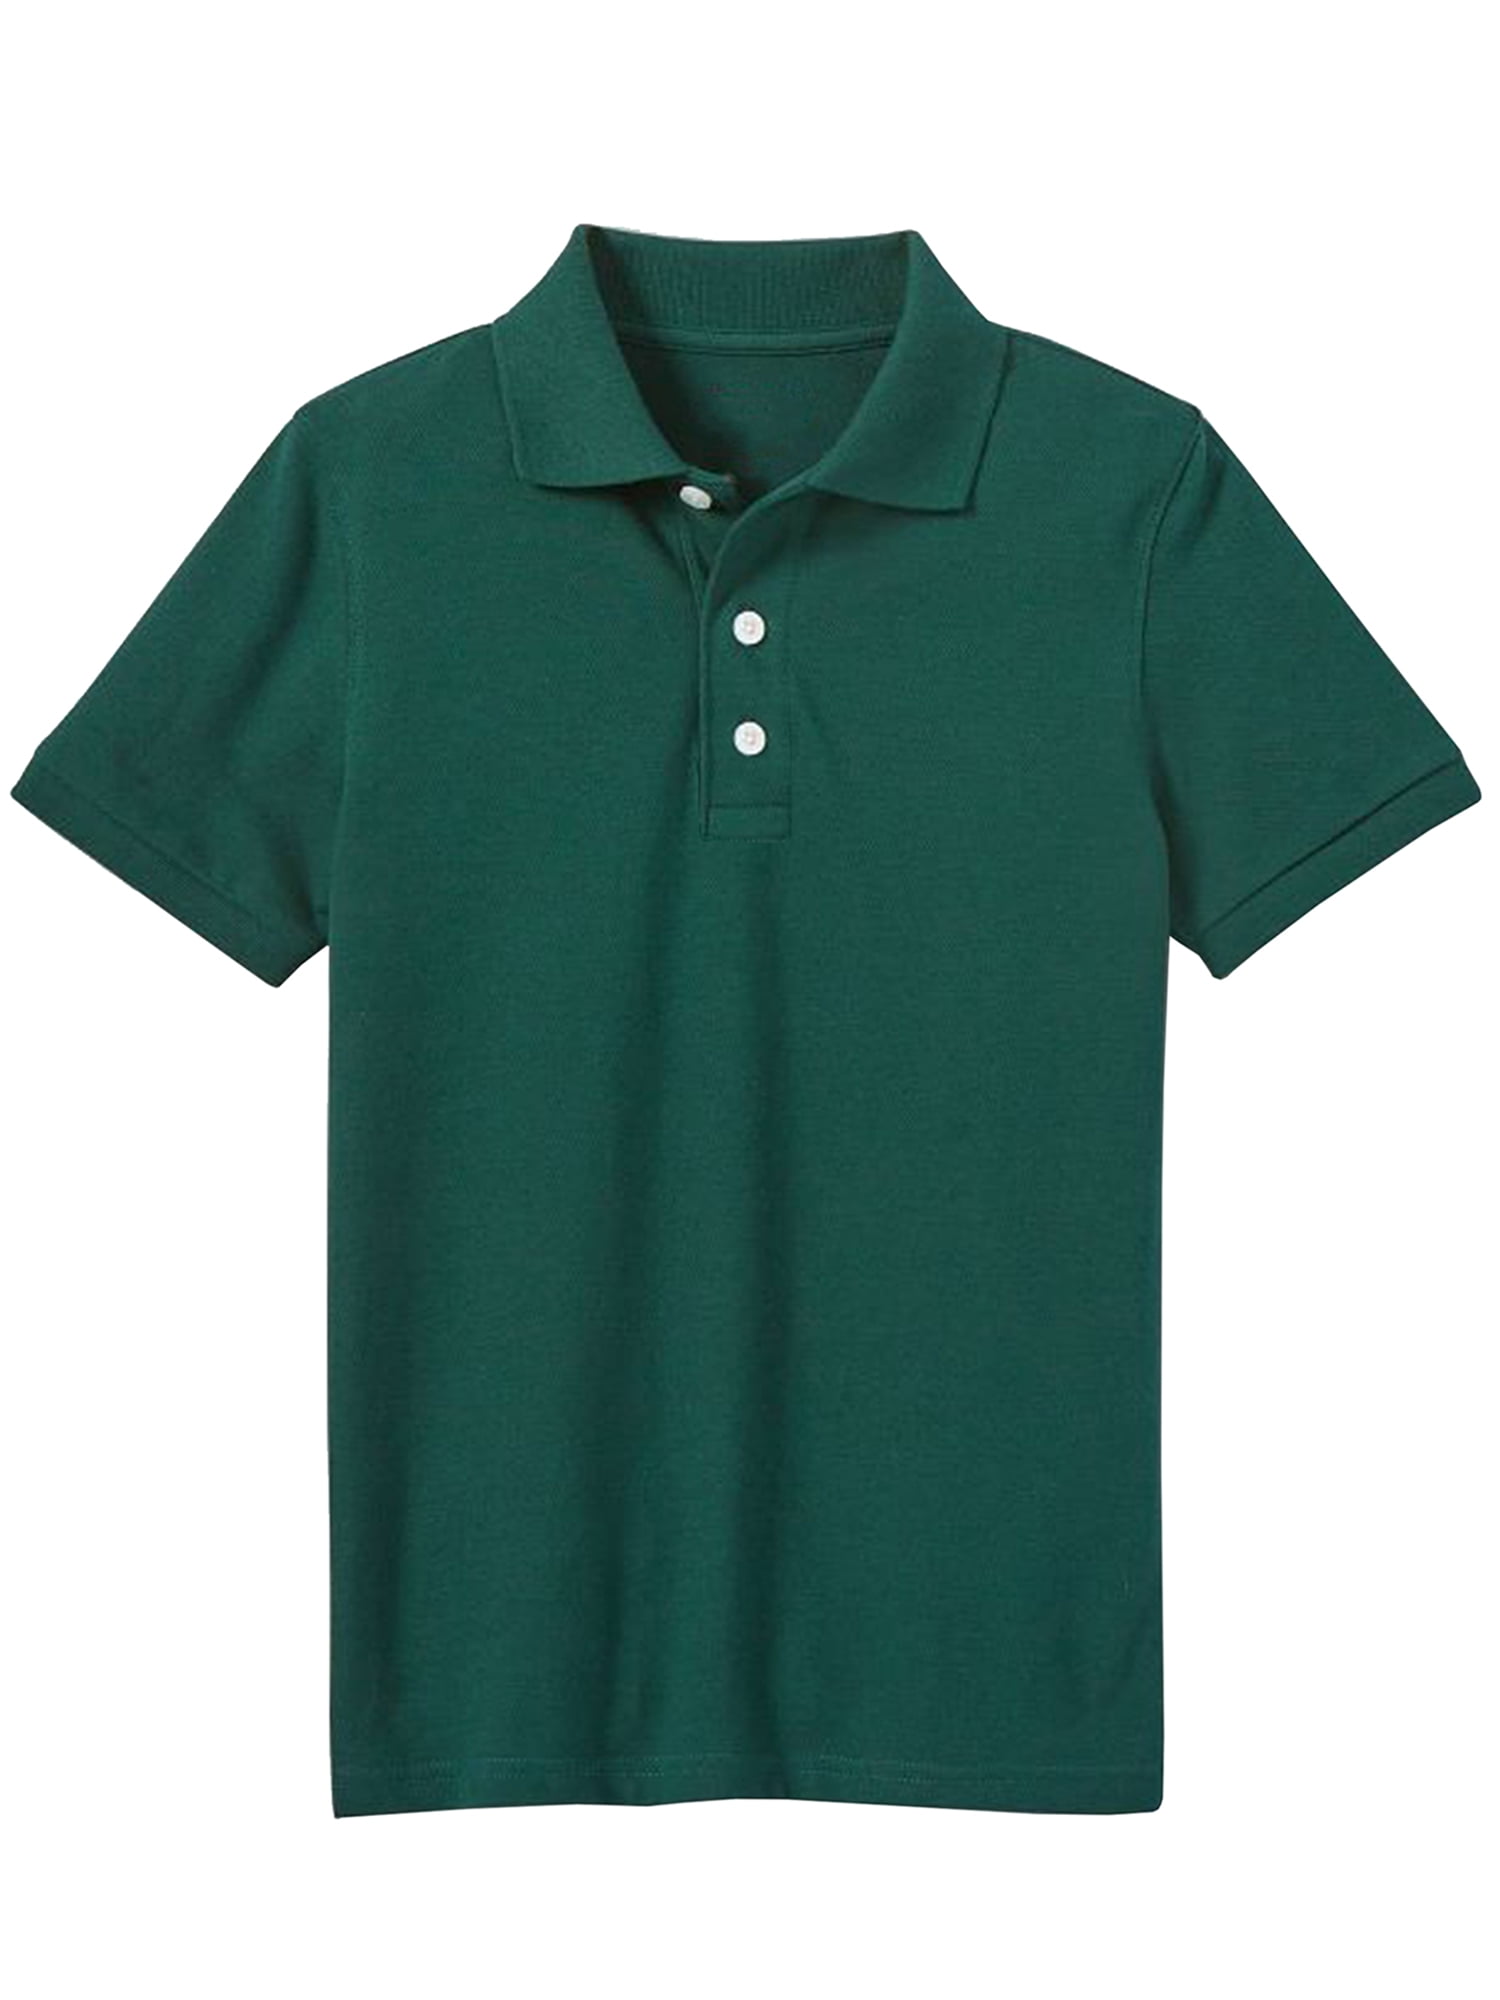 Boys Green Uniform T-Shirt-XS 4-5 